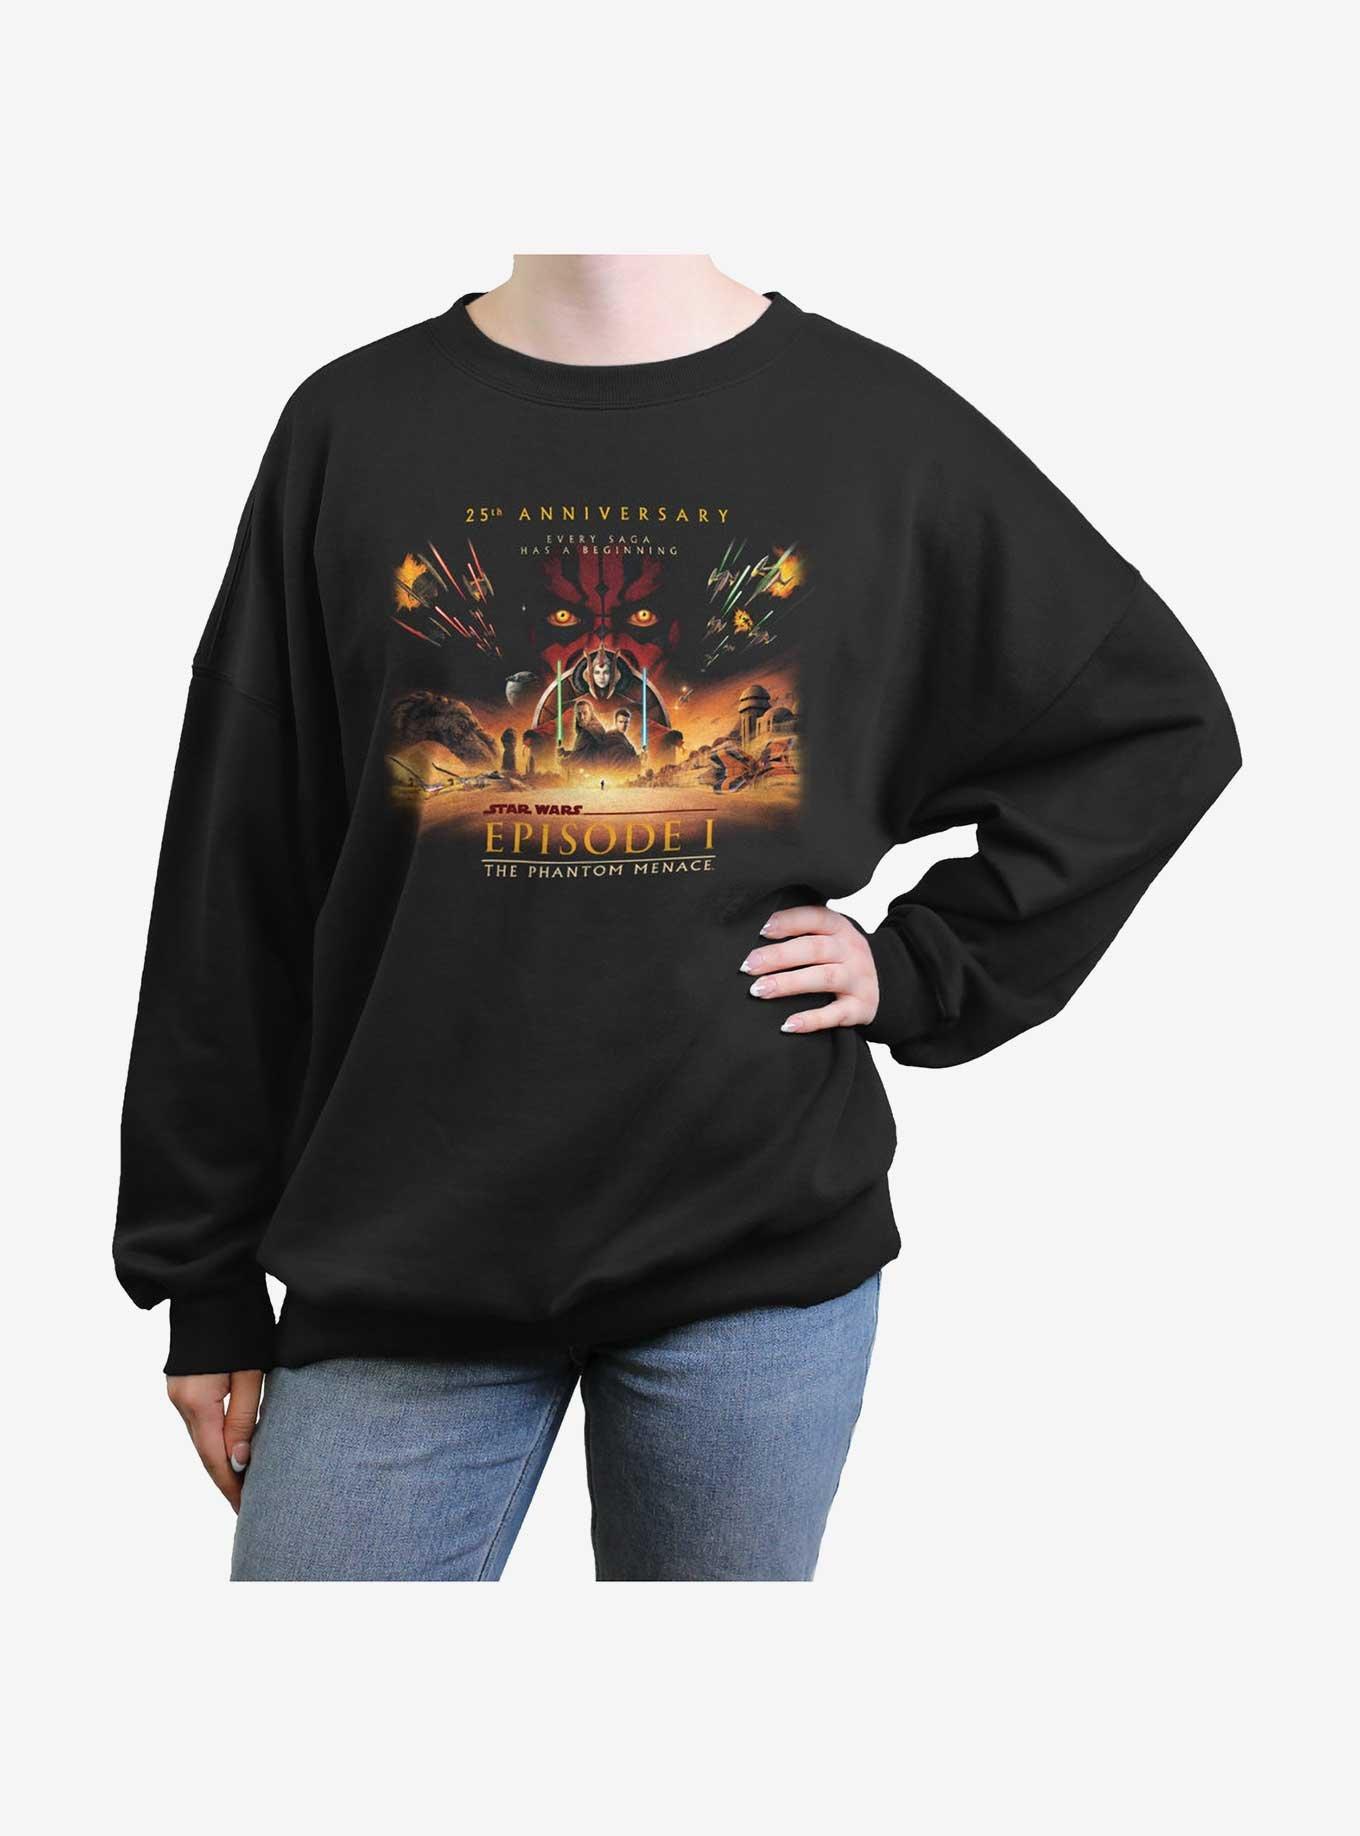 Star Wars Episode I: The Phantom Menace Wide 25th Anniversary Poster Girls Oversized Sweatshirt, BLACK, hi-res